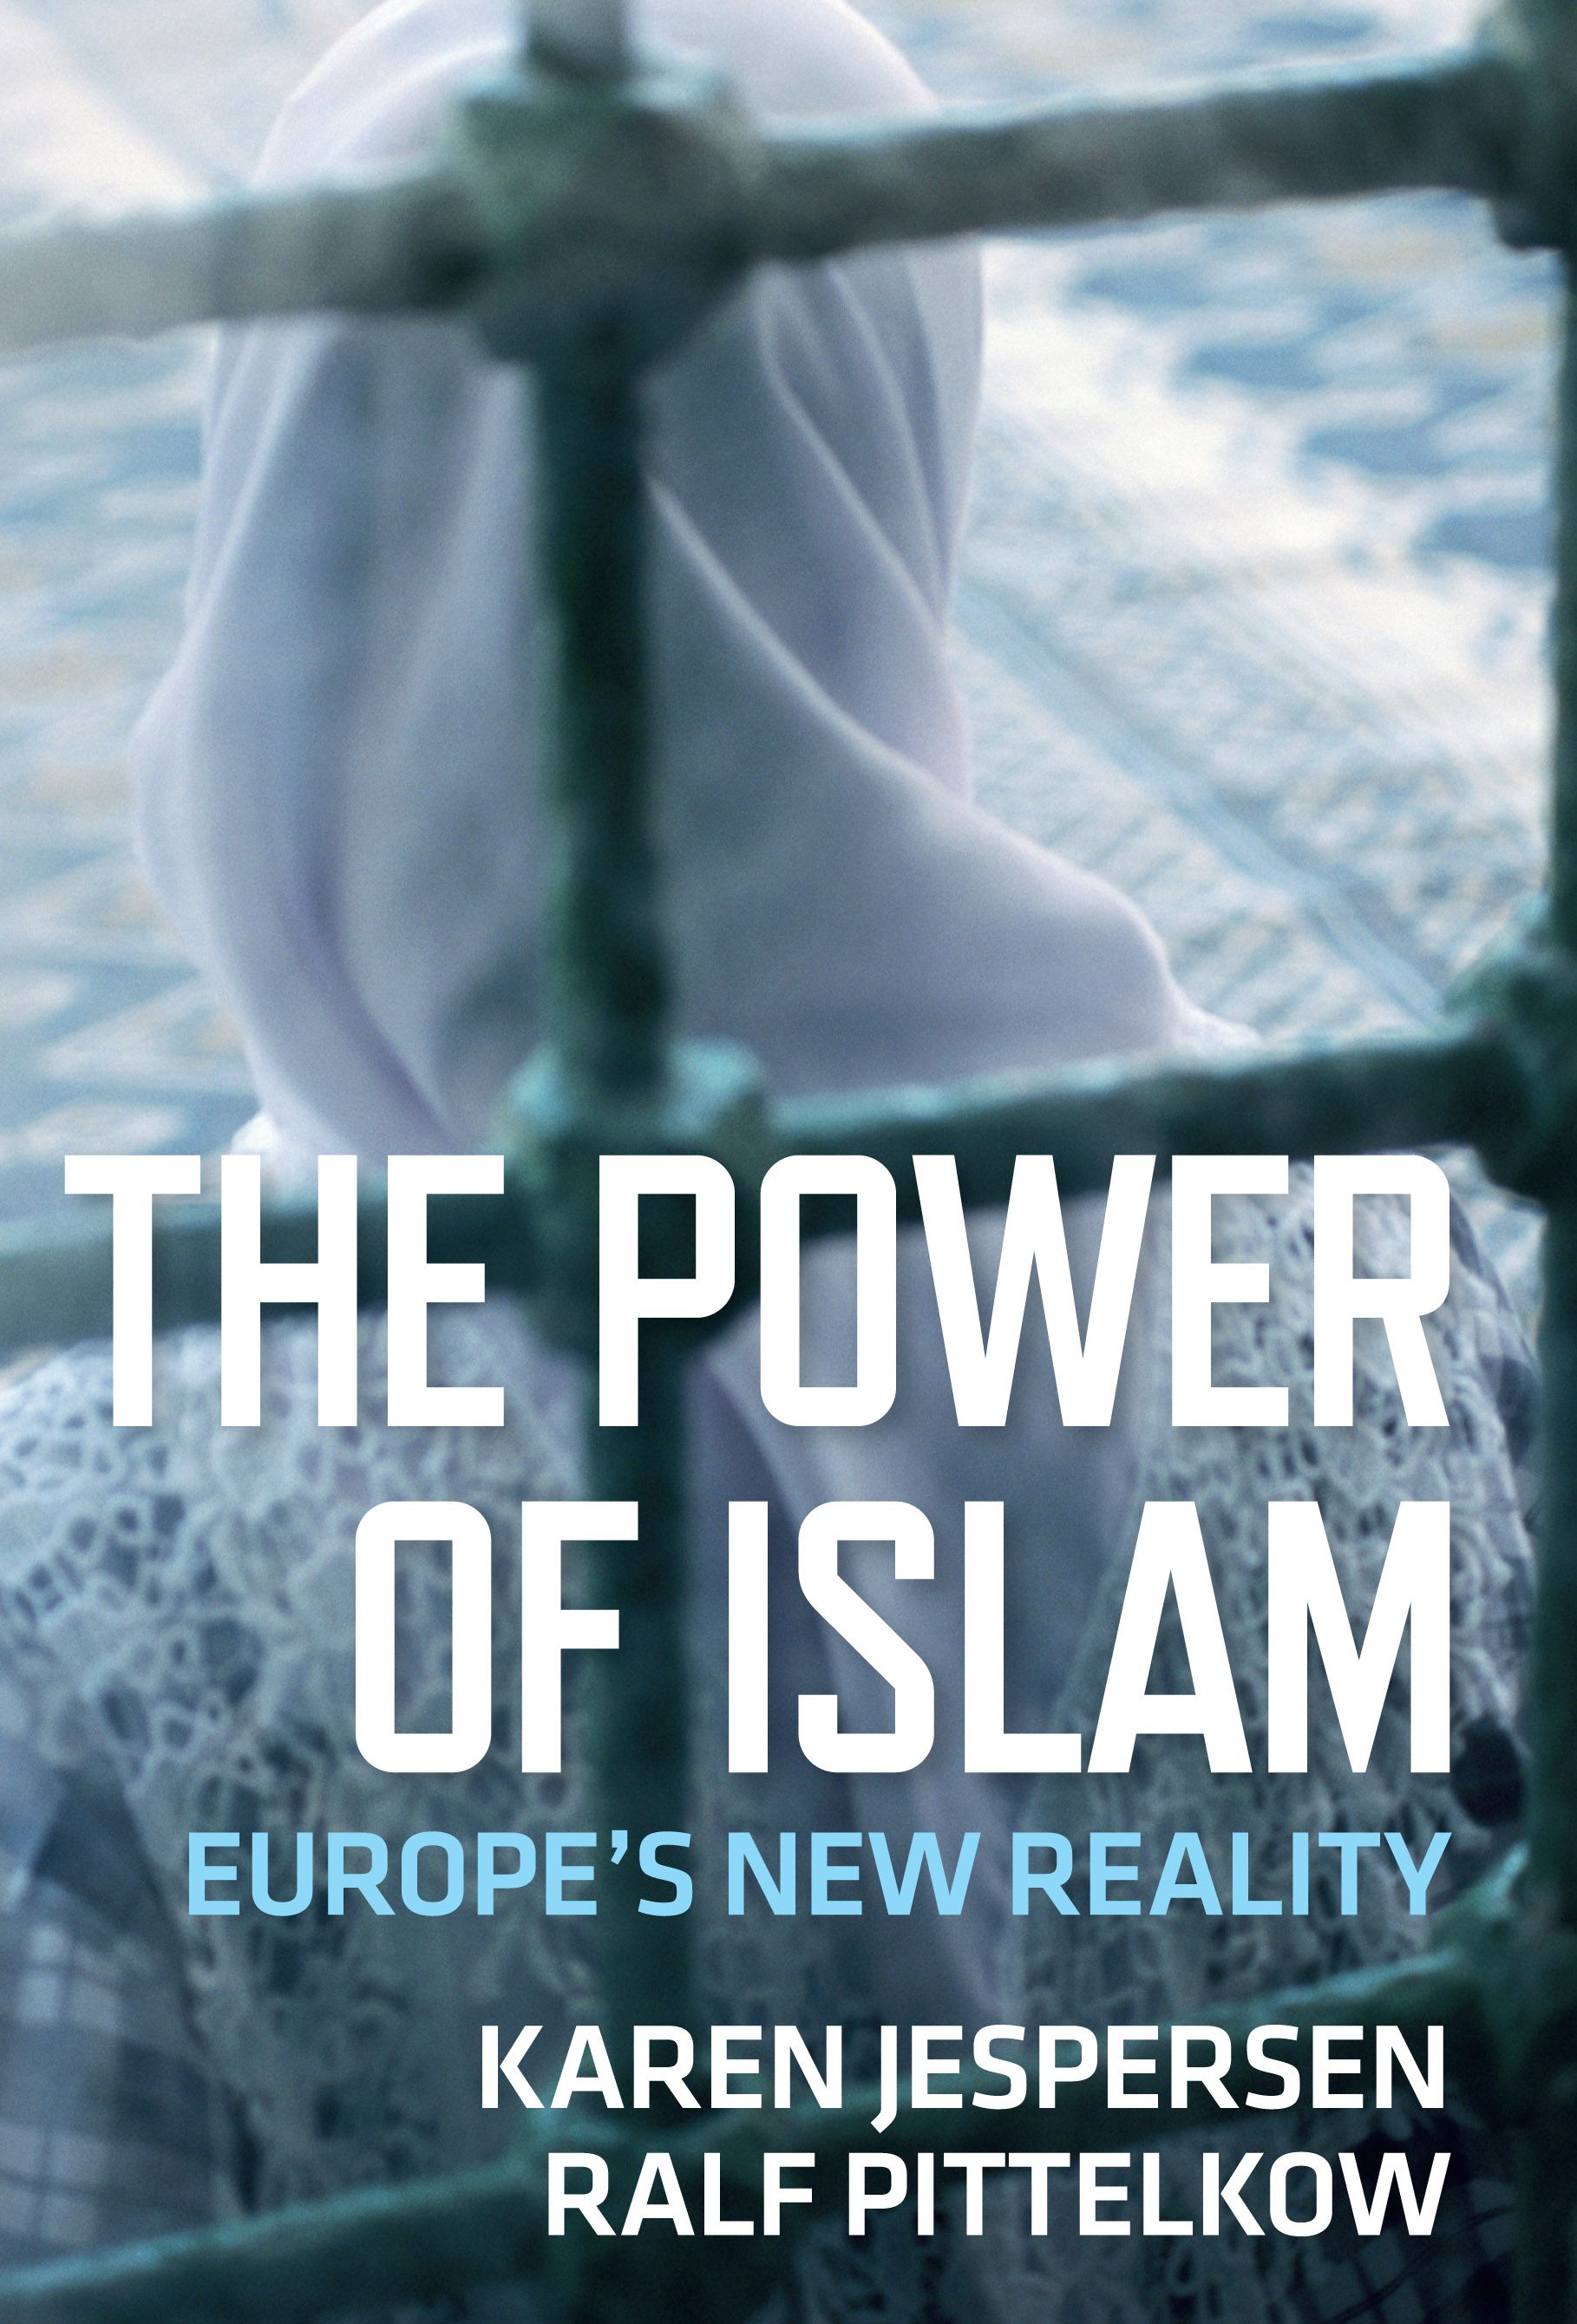 The Power of Islam, e-bog af Karen Jespersen, Ralf Pittelkow